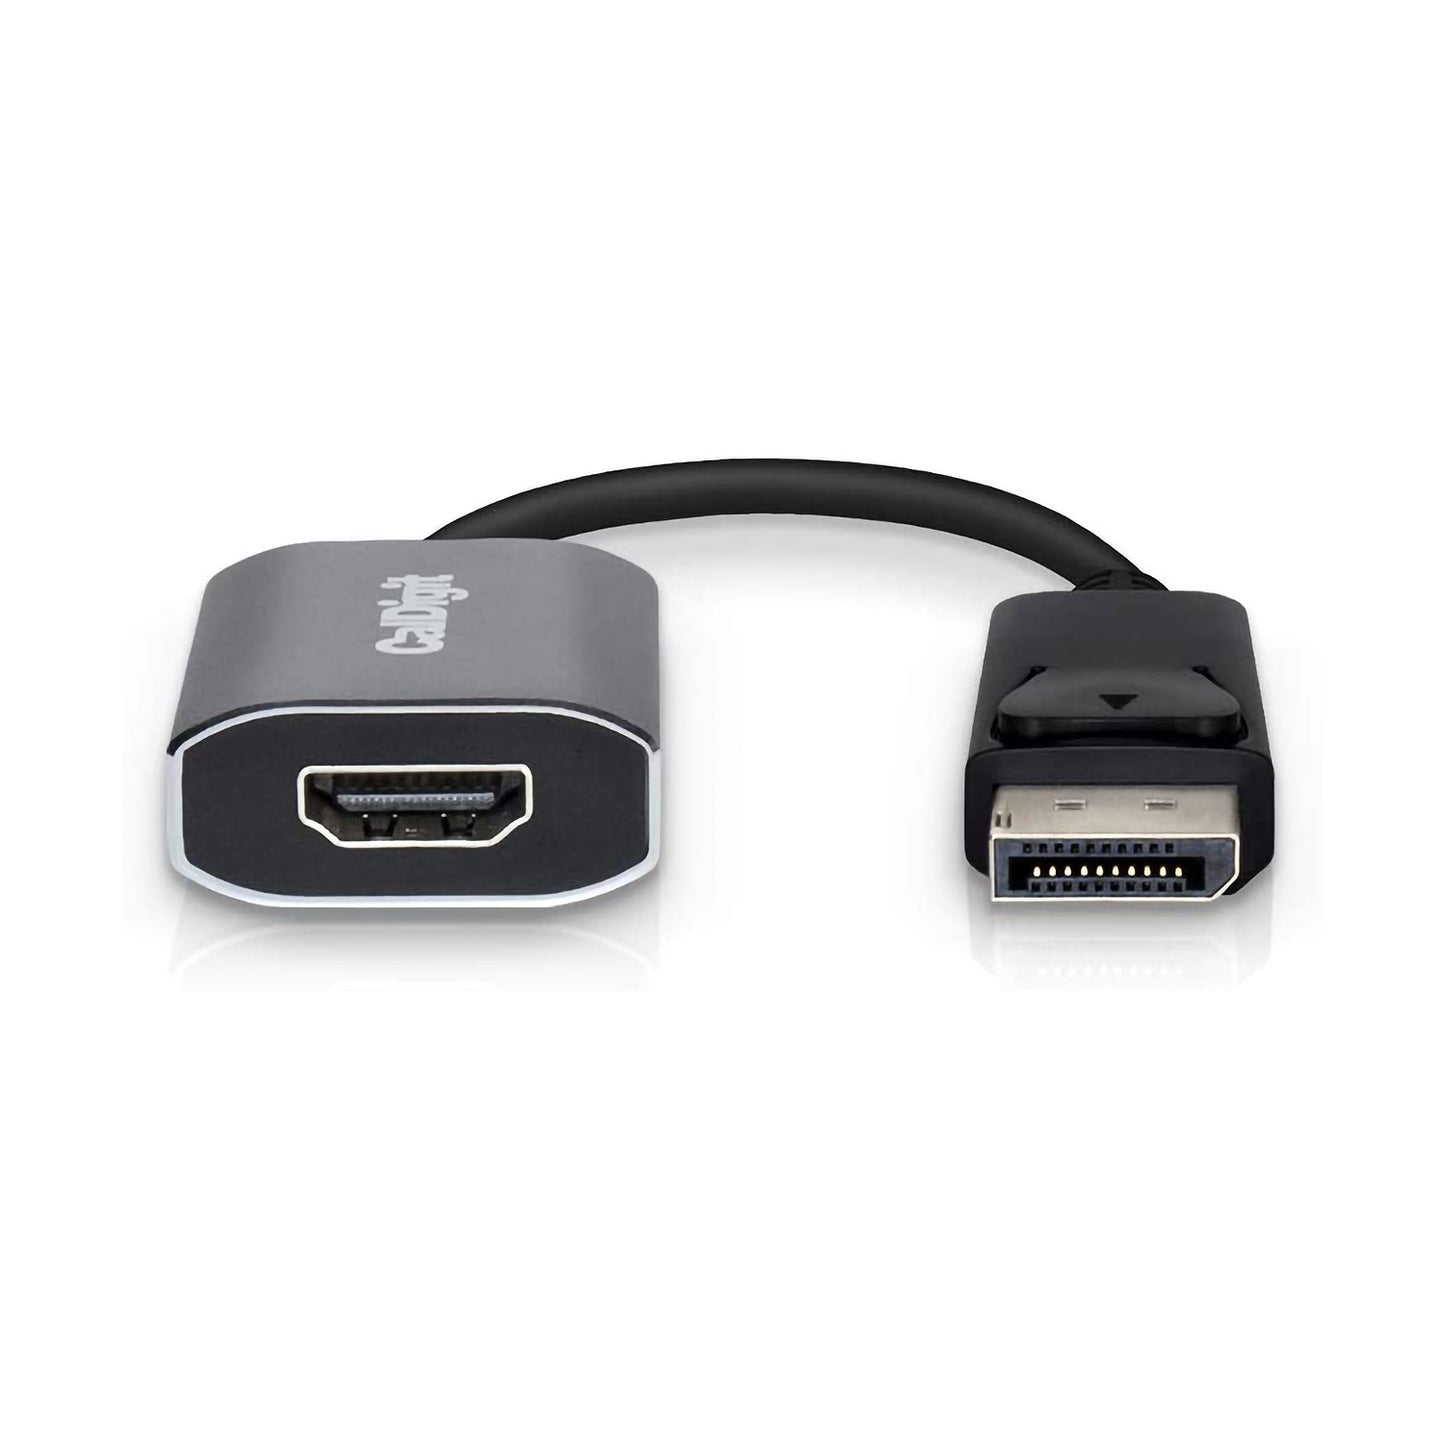 Active DisplayPort 1.2 to HDMI 2.0 Adapter